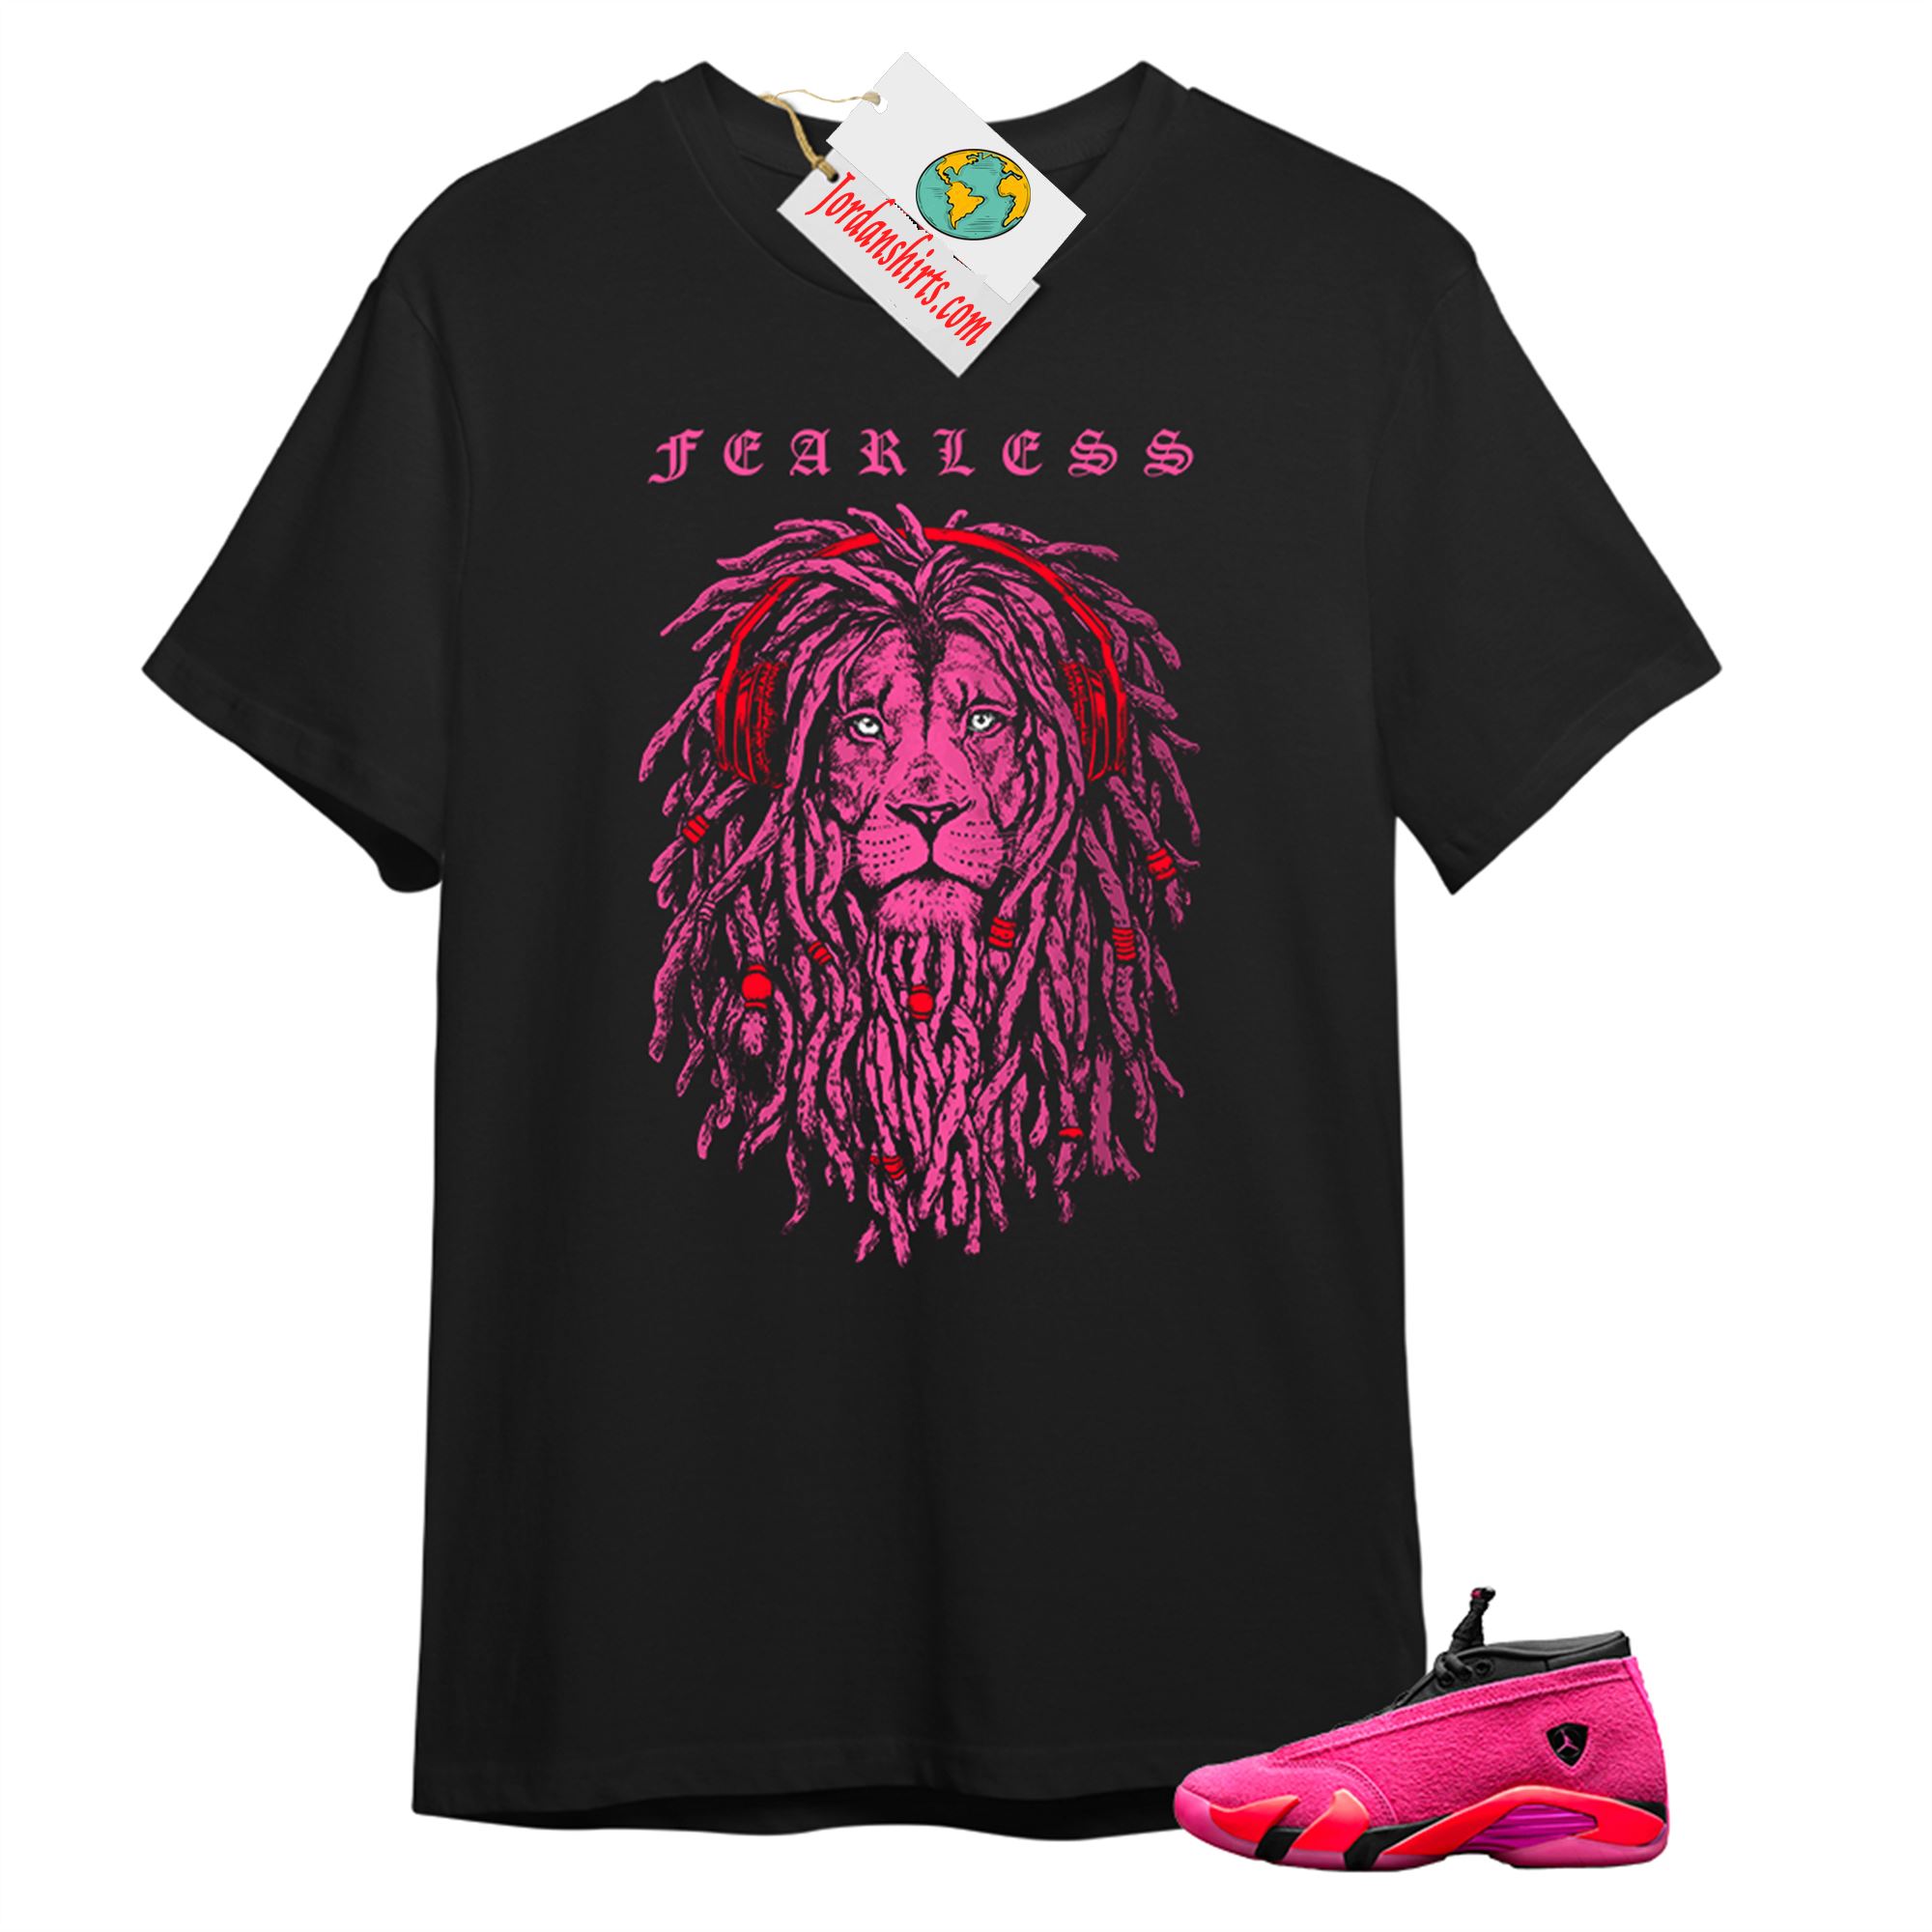 Jordan 14 Shirt, Fearless Lion Black T-shirt Air Jordan 14 Wmns Shocking Pink 14s Plus Size Up To 5xl